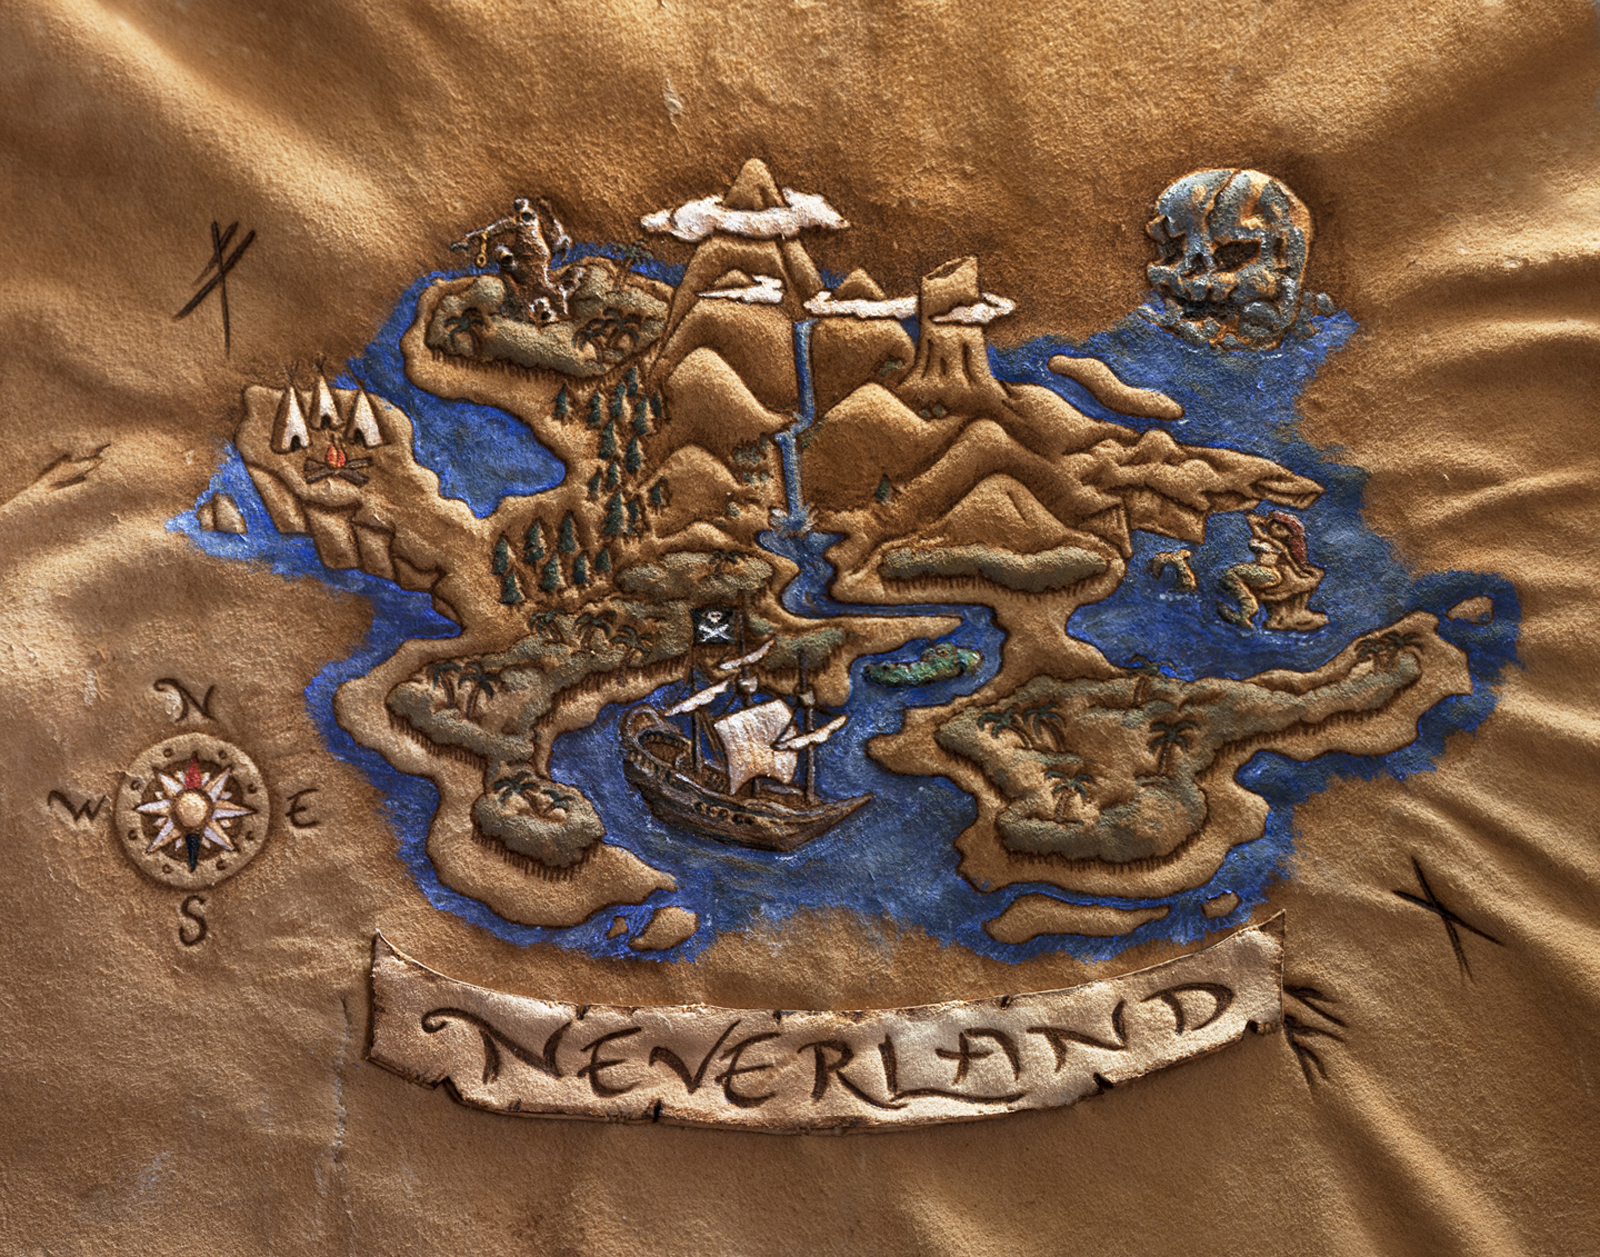 Peter Pan – Neverland Map Reproduction